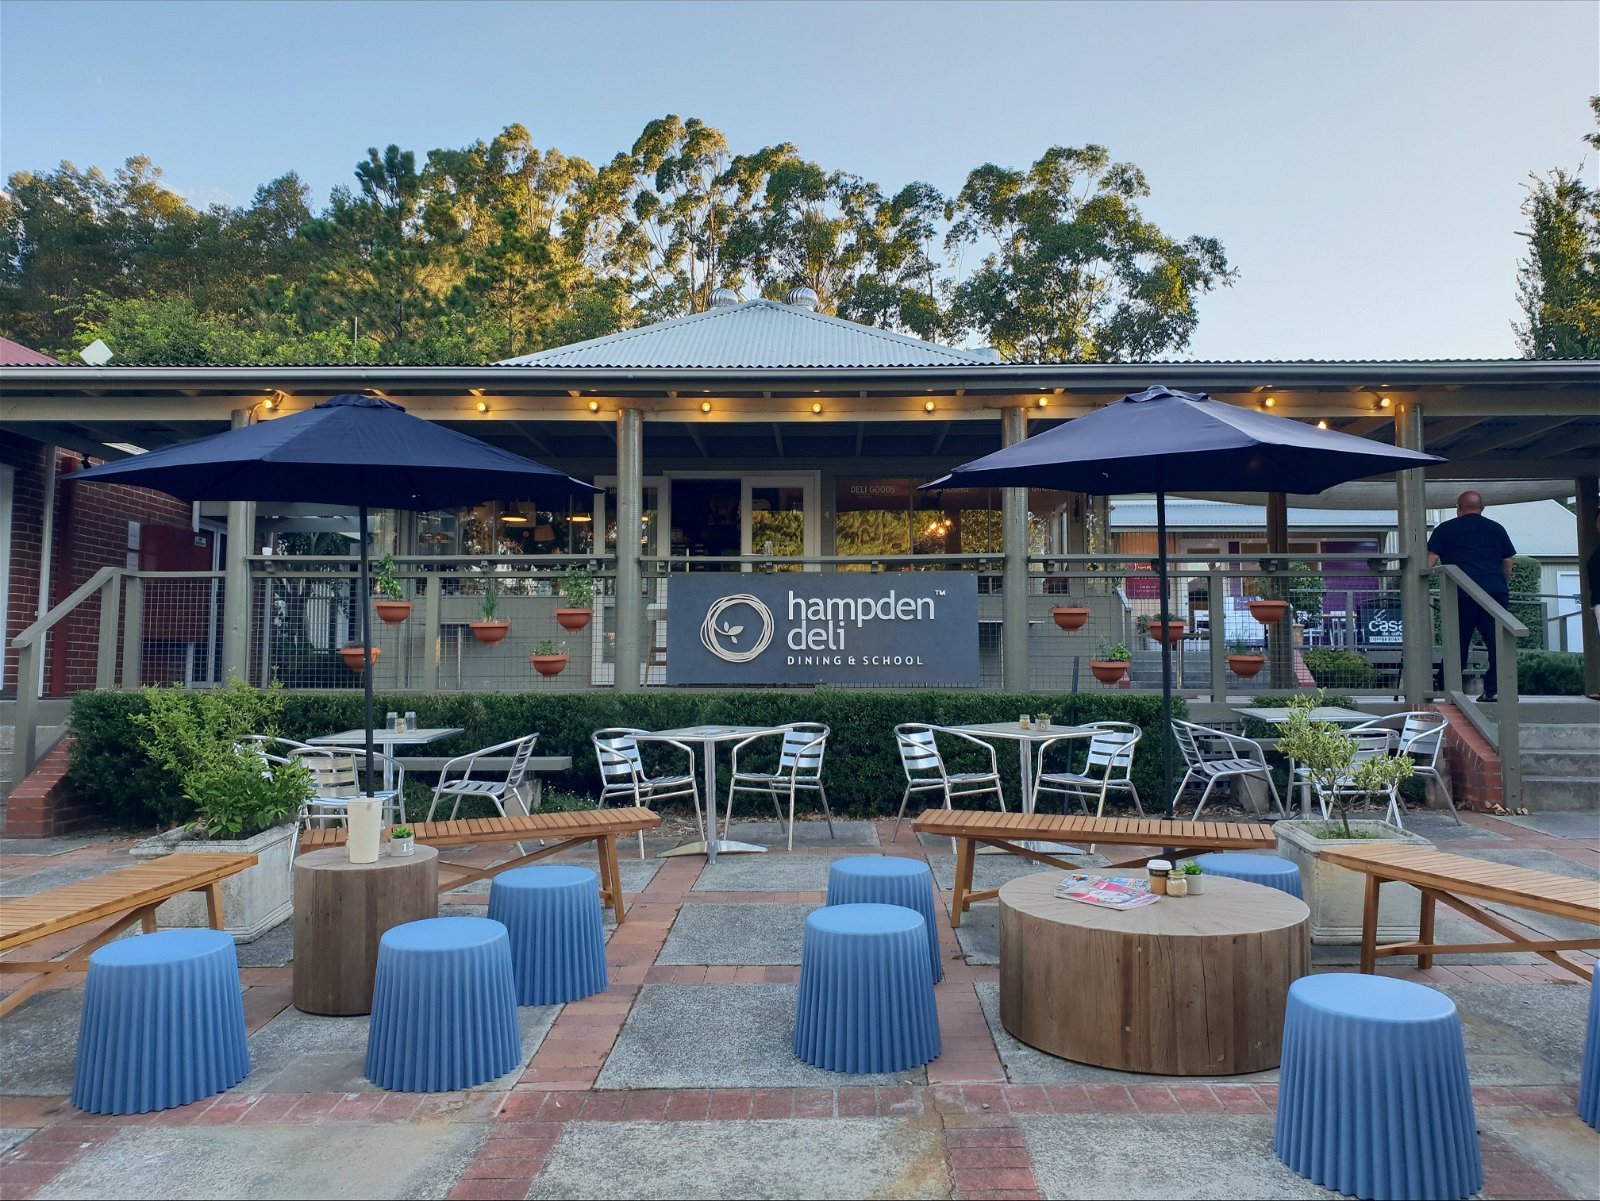 Hampden Deli Dining and School - Pubs Sydney